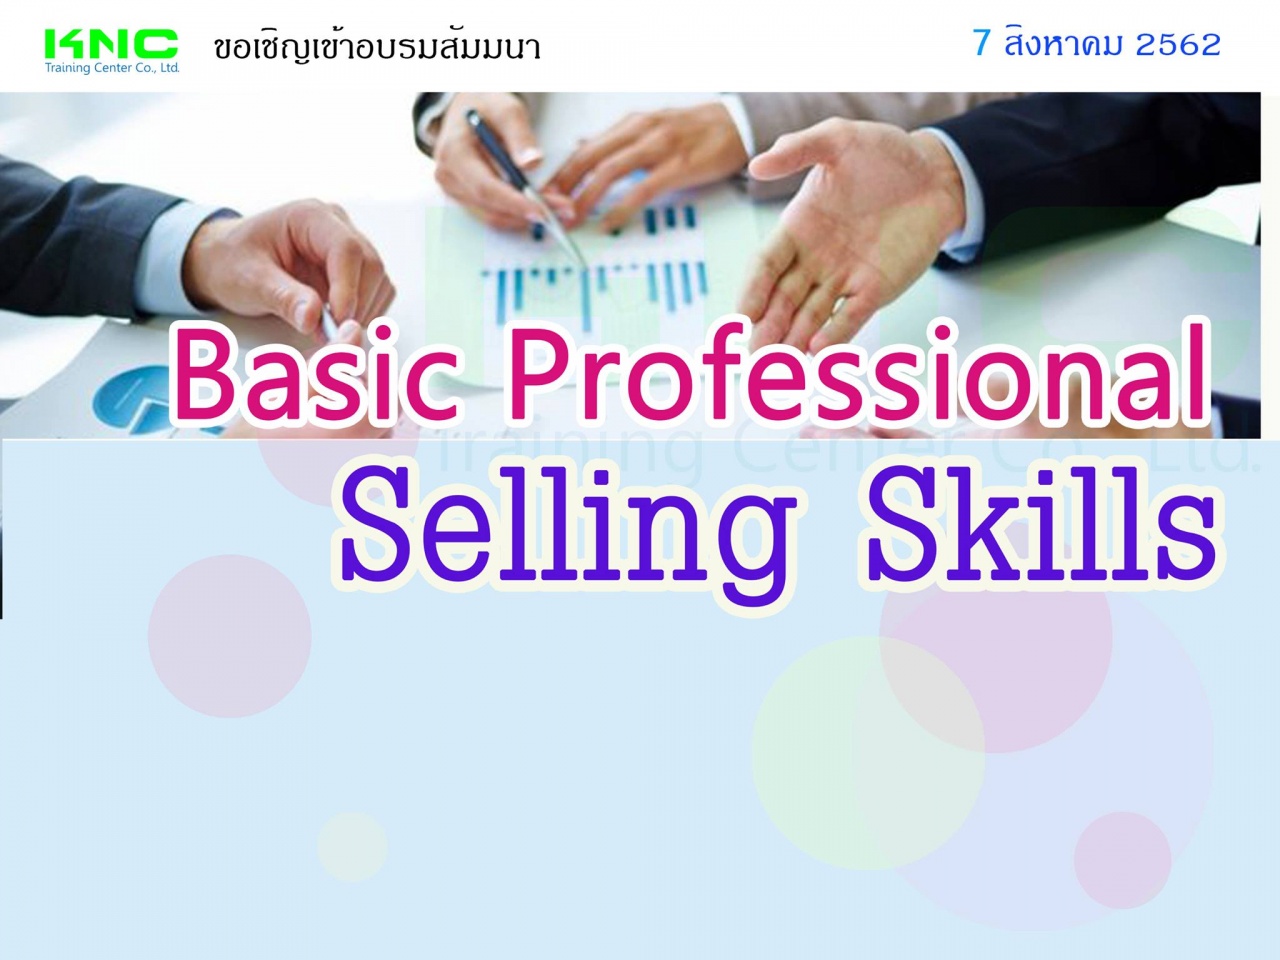 Basic Professional Selling Skills